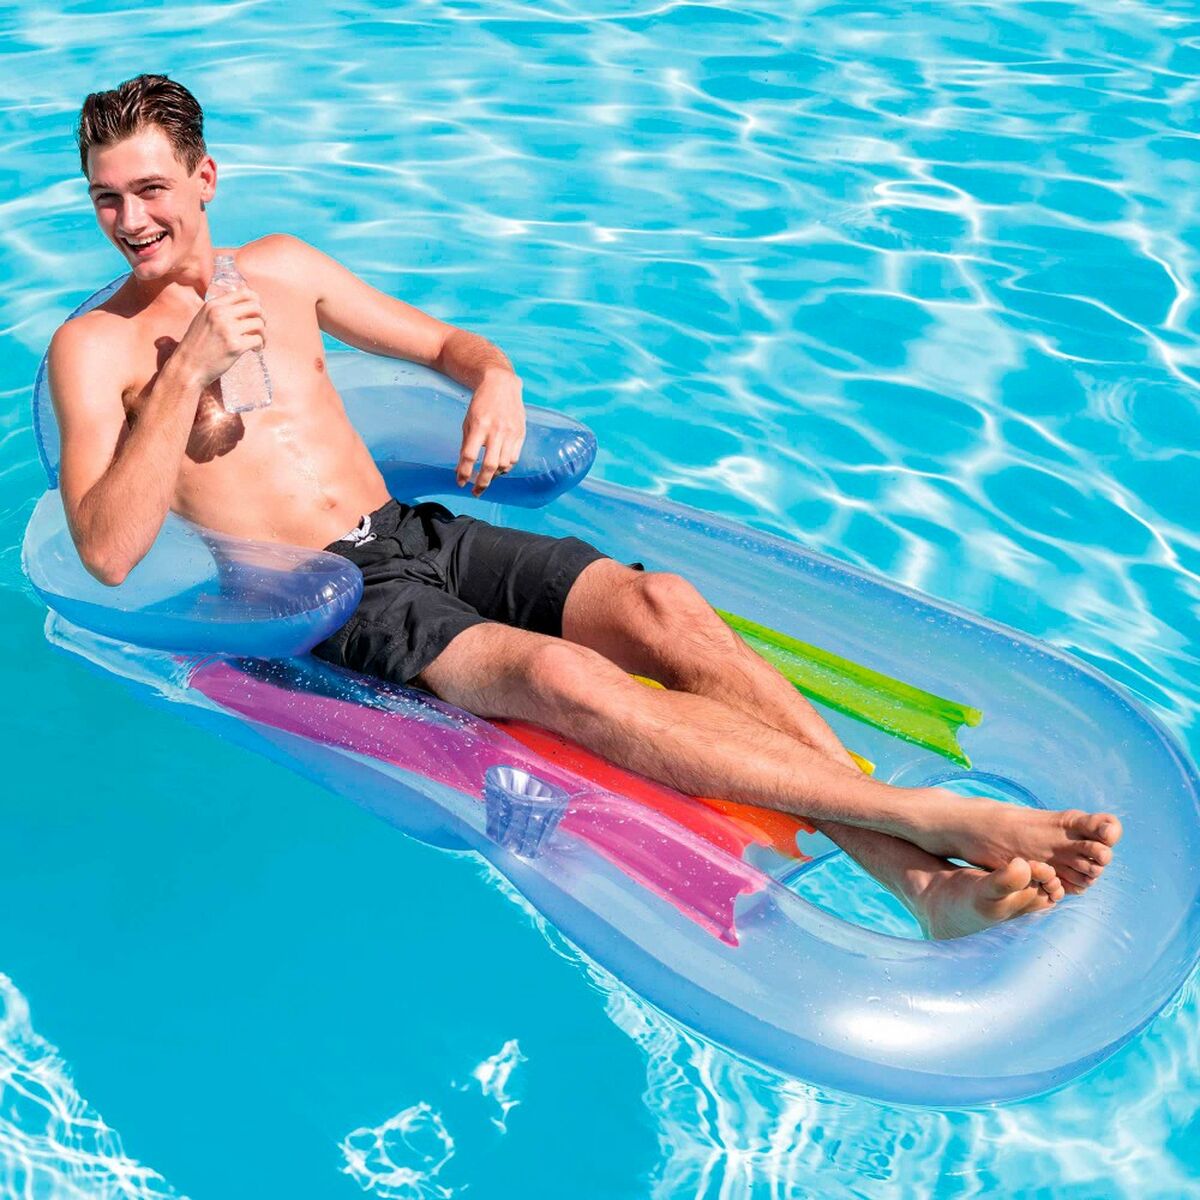 Inflatable Pool Chair Intex Rainbow 160 x 53 x 85 cm (6 Units)